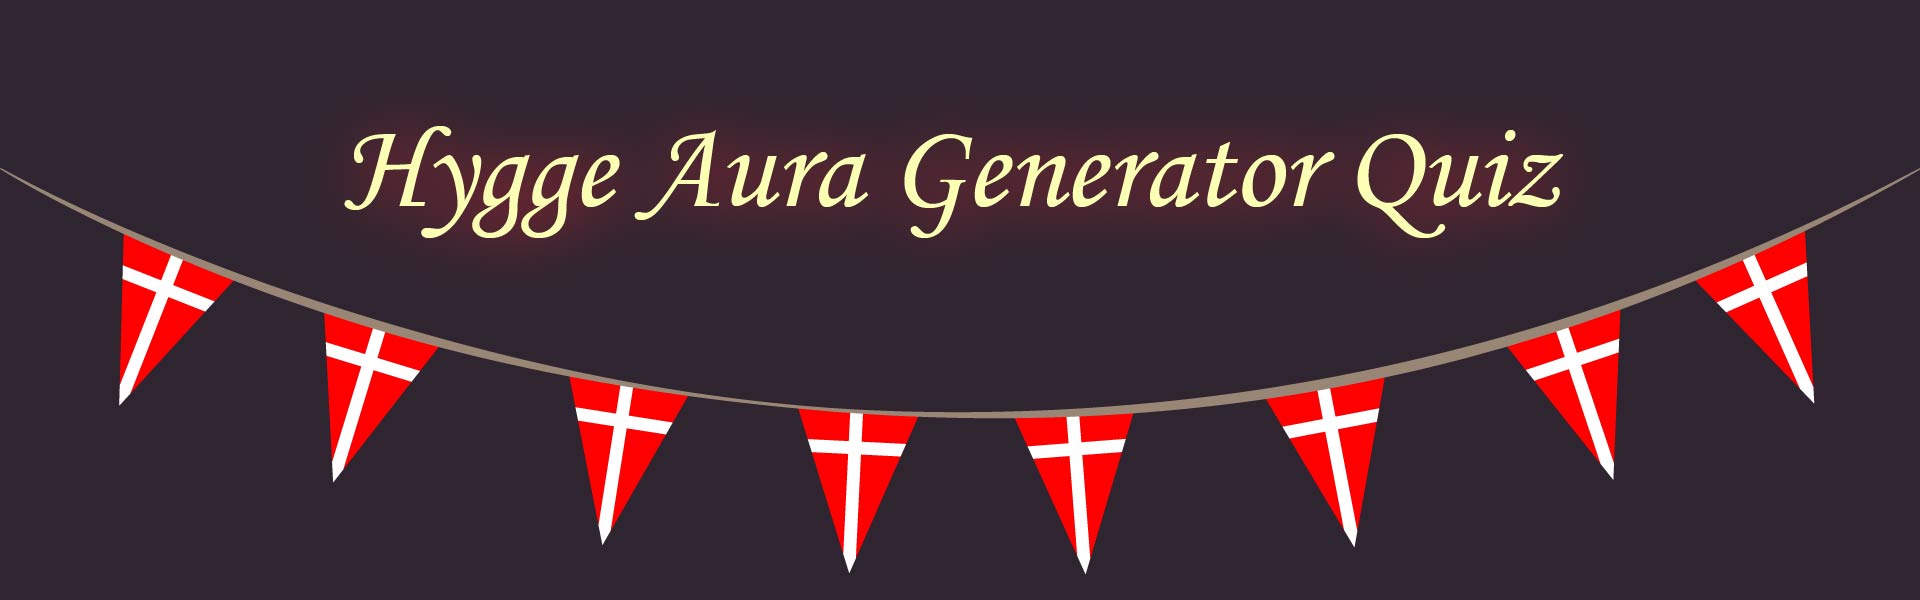 Hygge Aura Generator Quiz